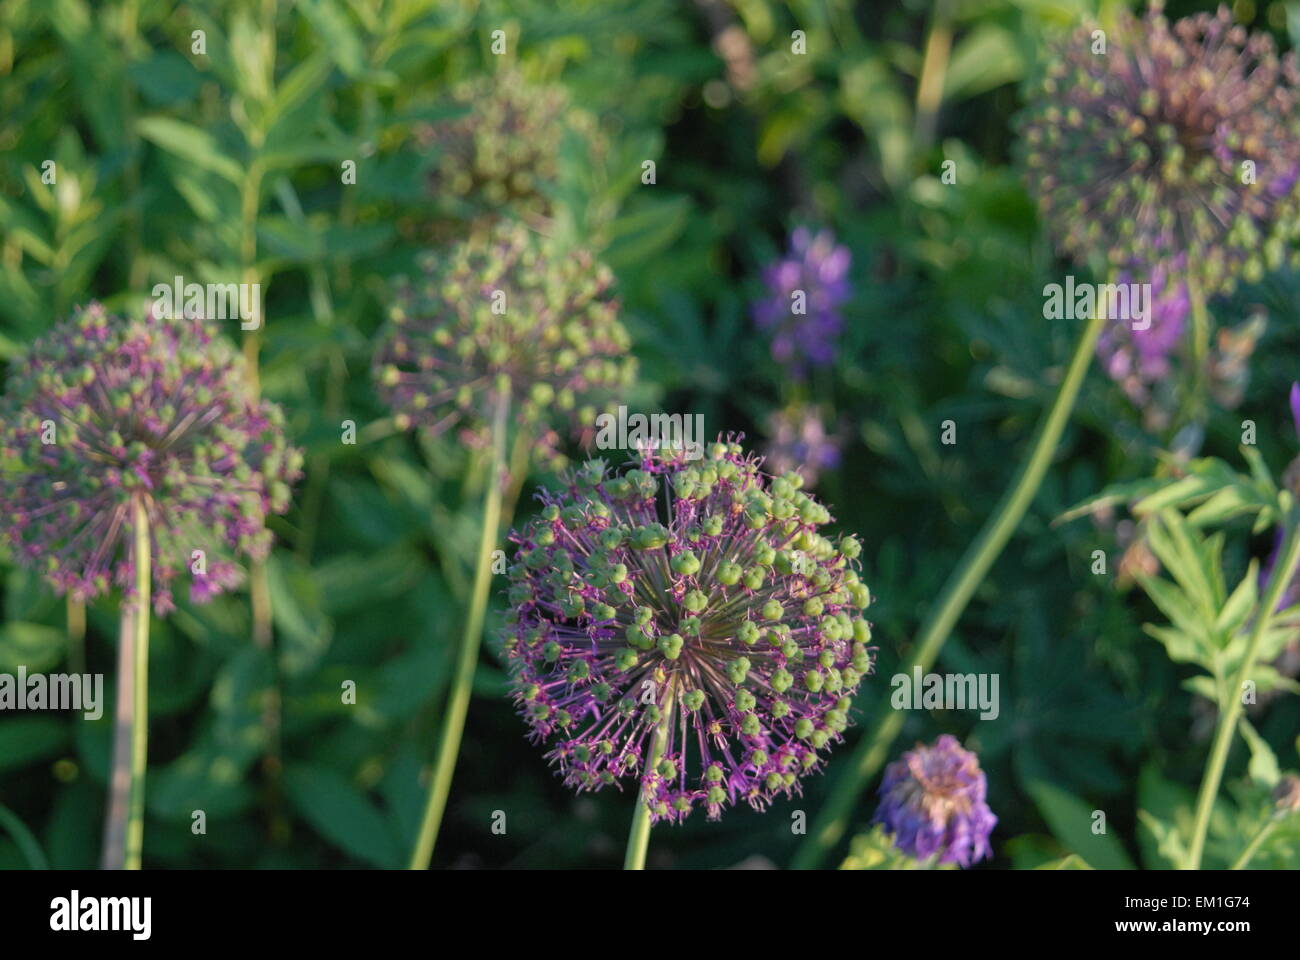 Ornamental Allium, purple onion plant, perennial seed-producing summer flower. Stock Photo